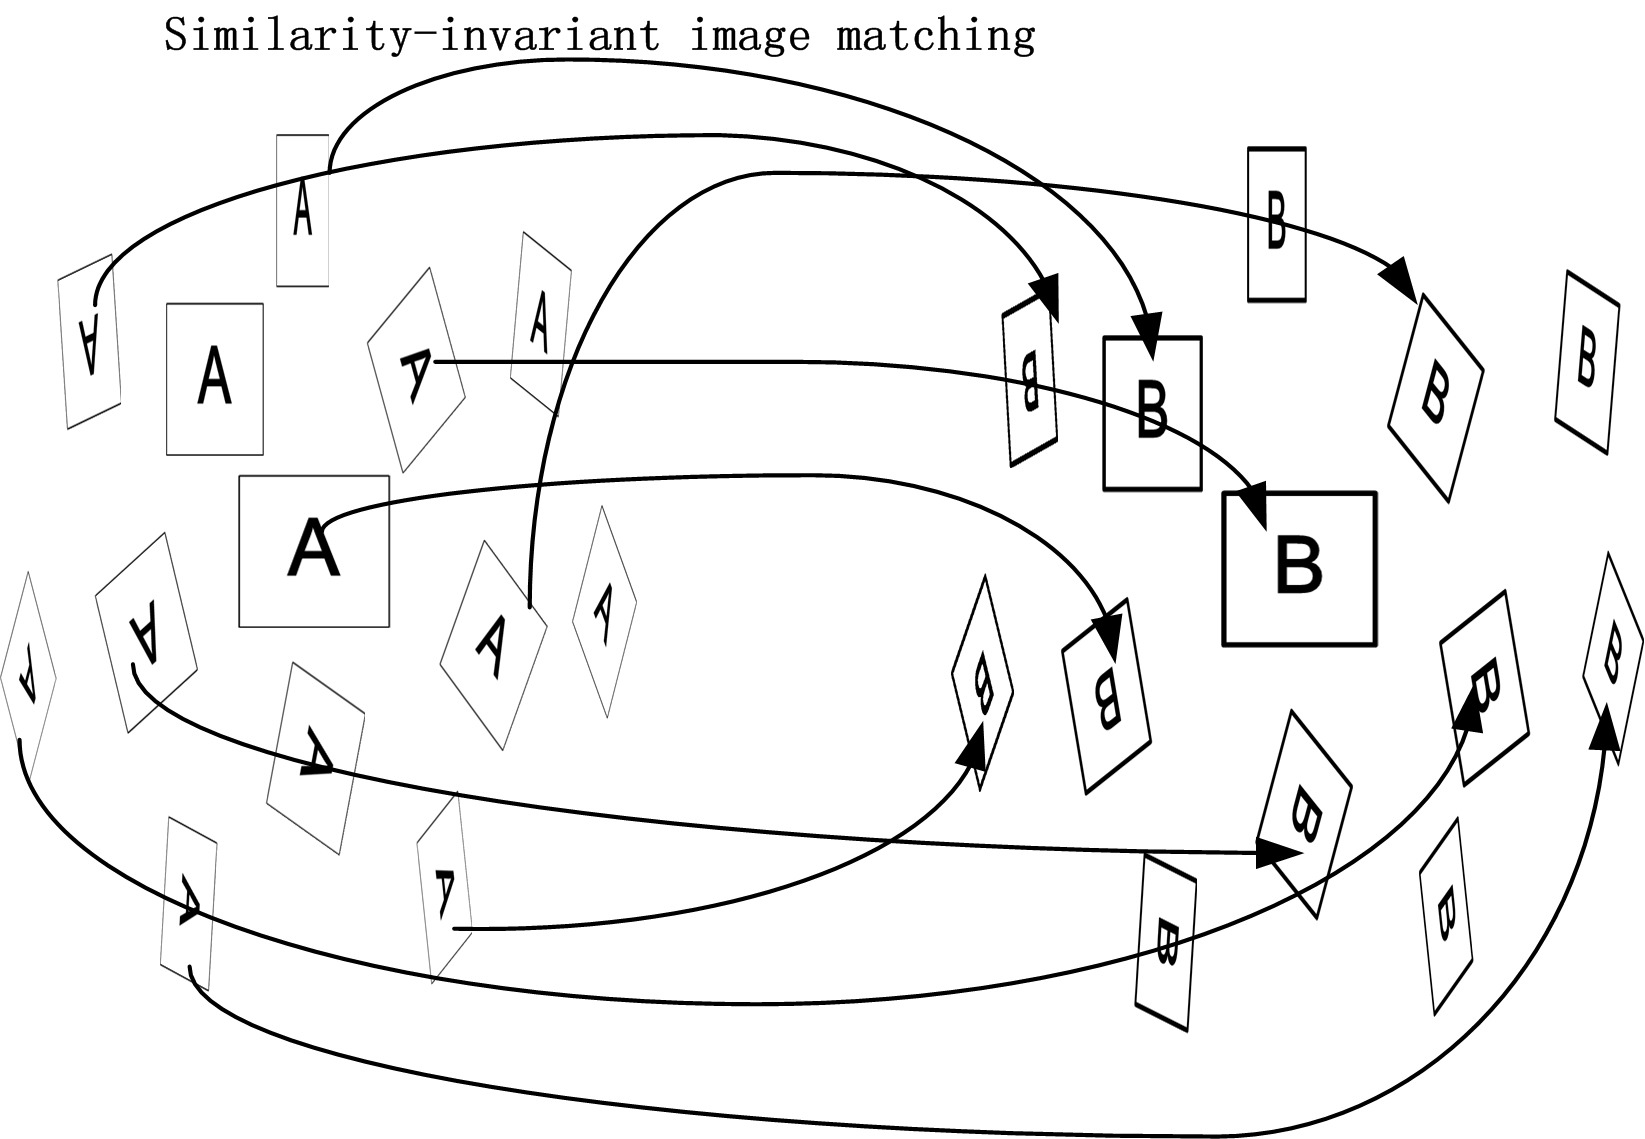 ASIFT algorithm overview